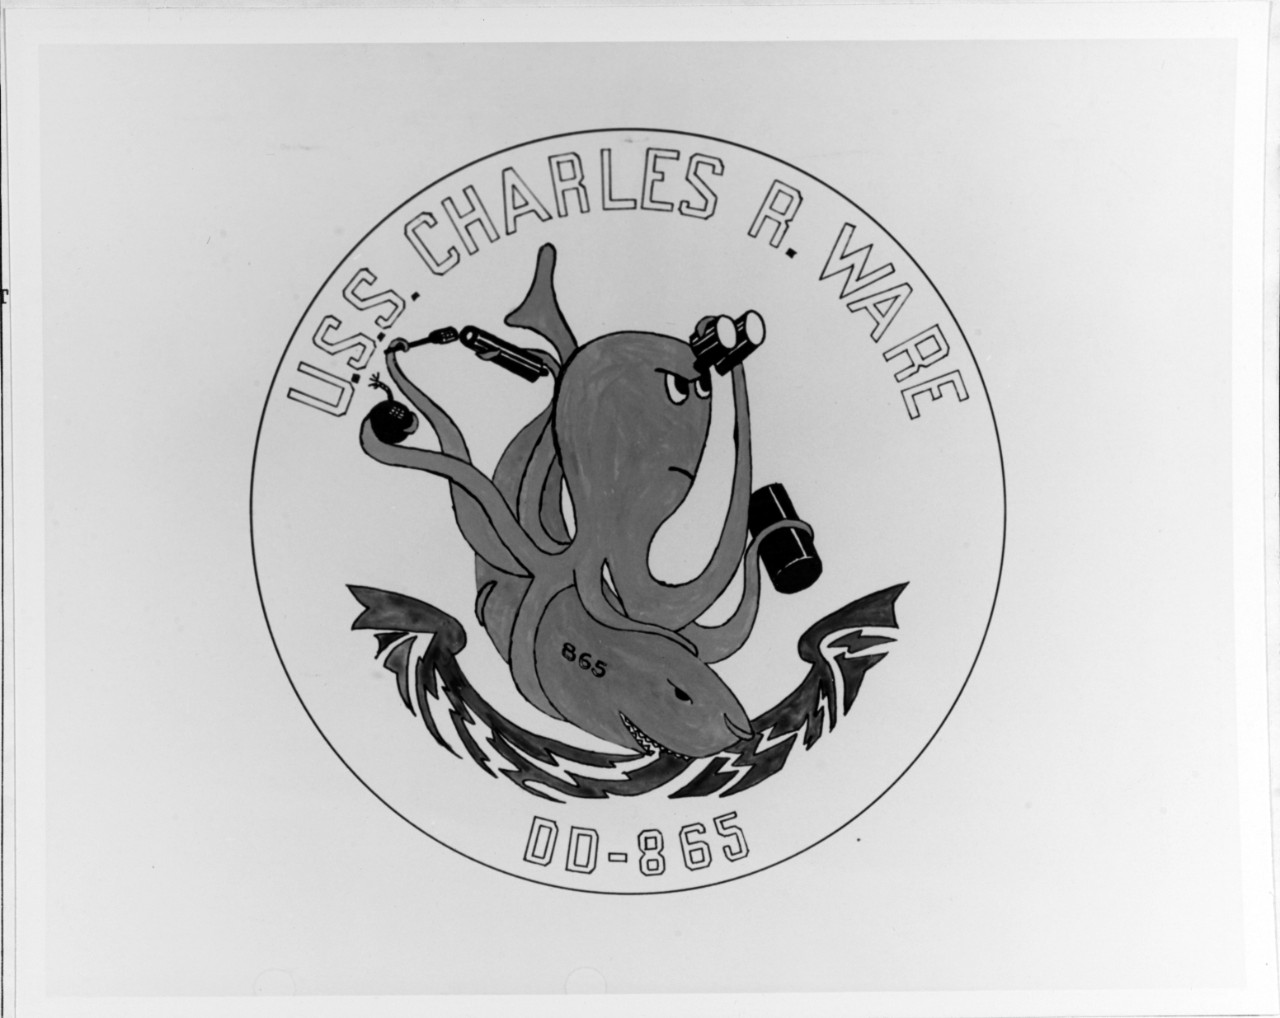 Insignia: USS CHARLES R. WARE (DD-865)